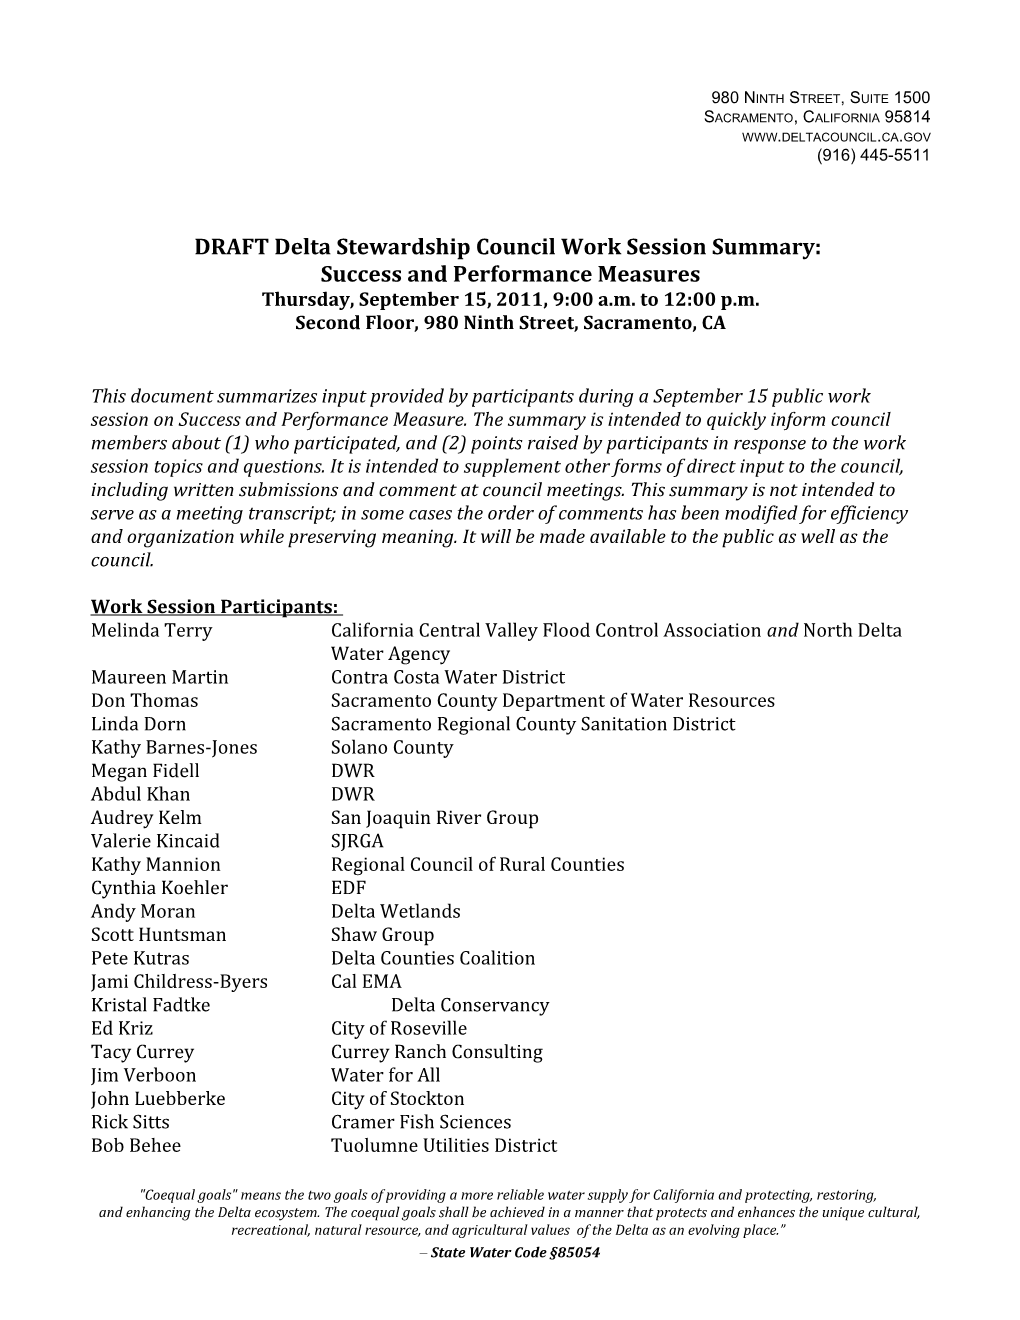 DRAFT Delta Stewardship Council Work Session Summary